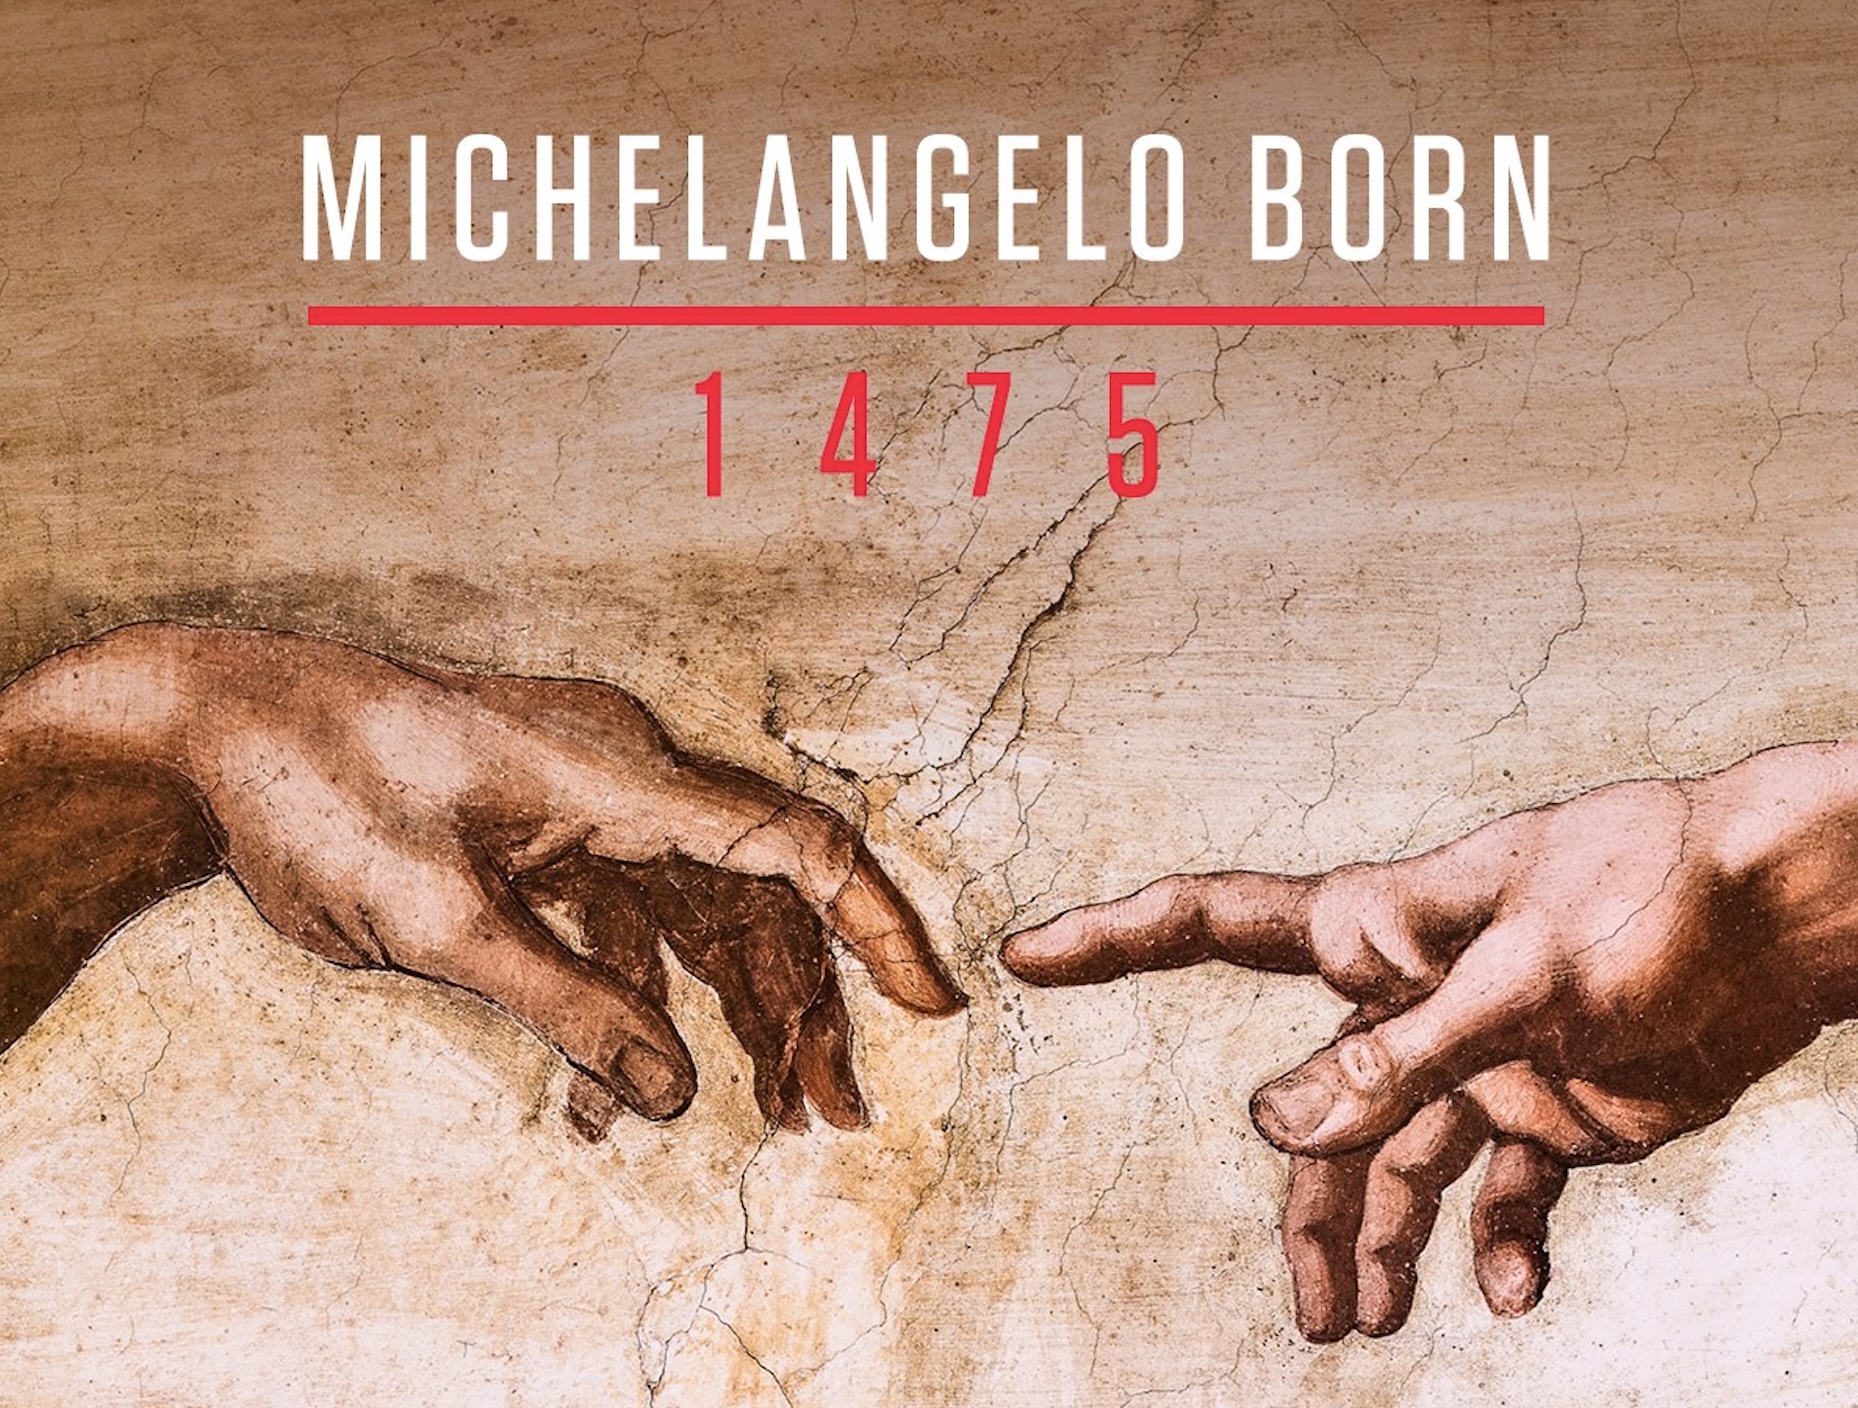 Michelangelo Buonarroti